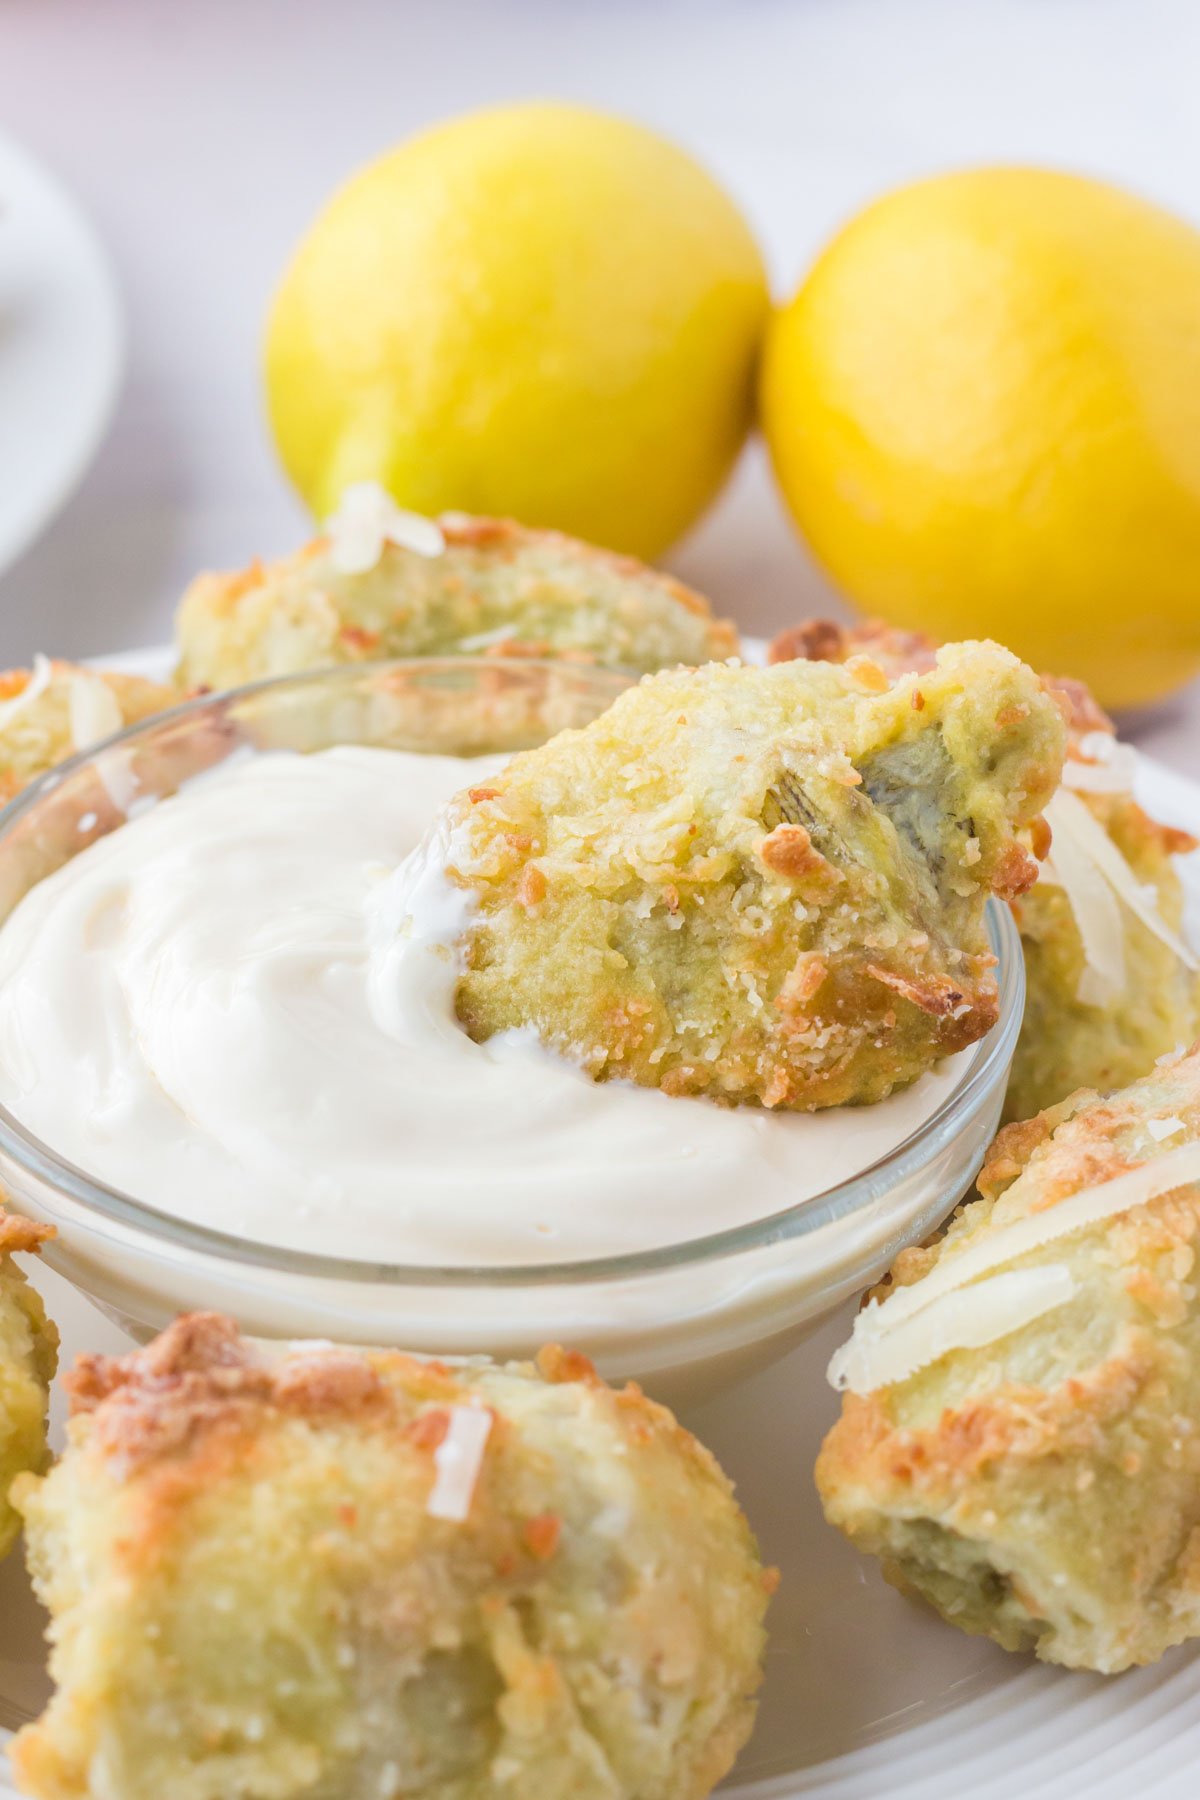 fried artichoke hearts, a bowl of creamy white dip, lemons